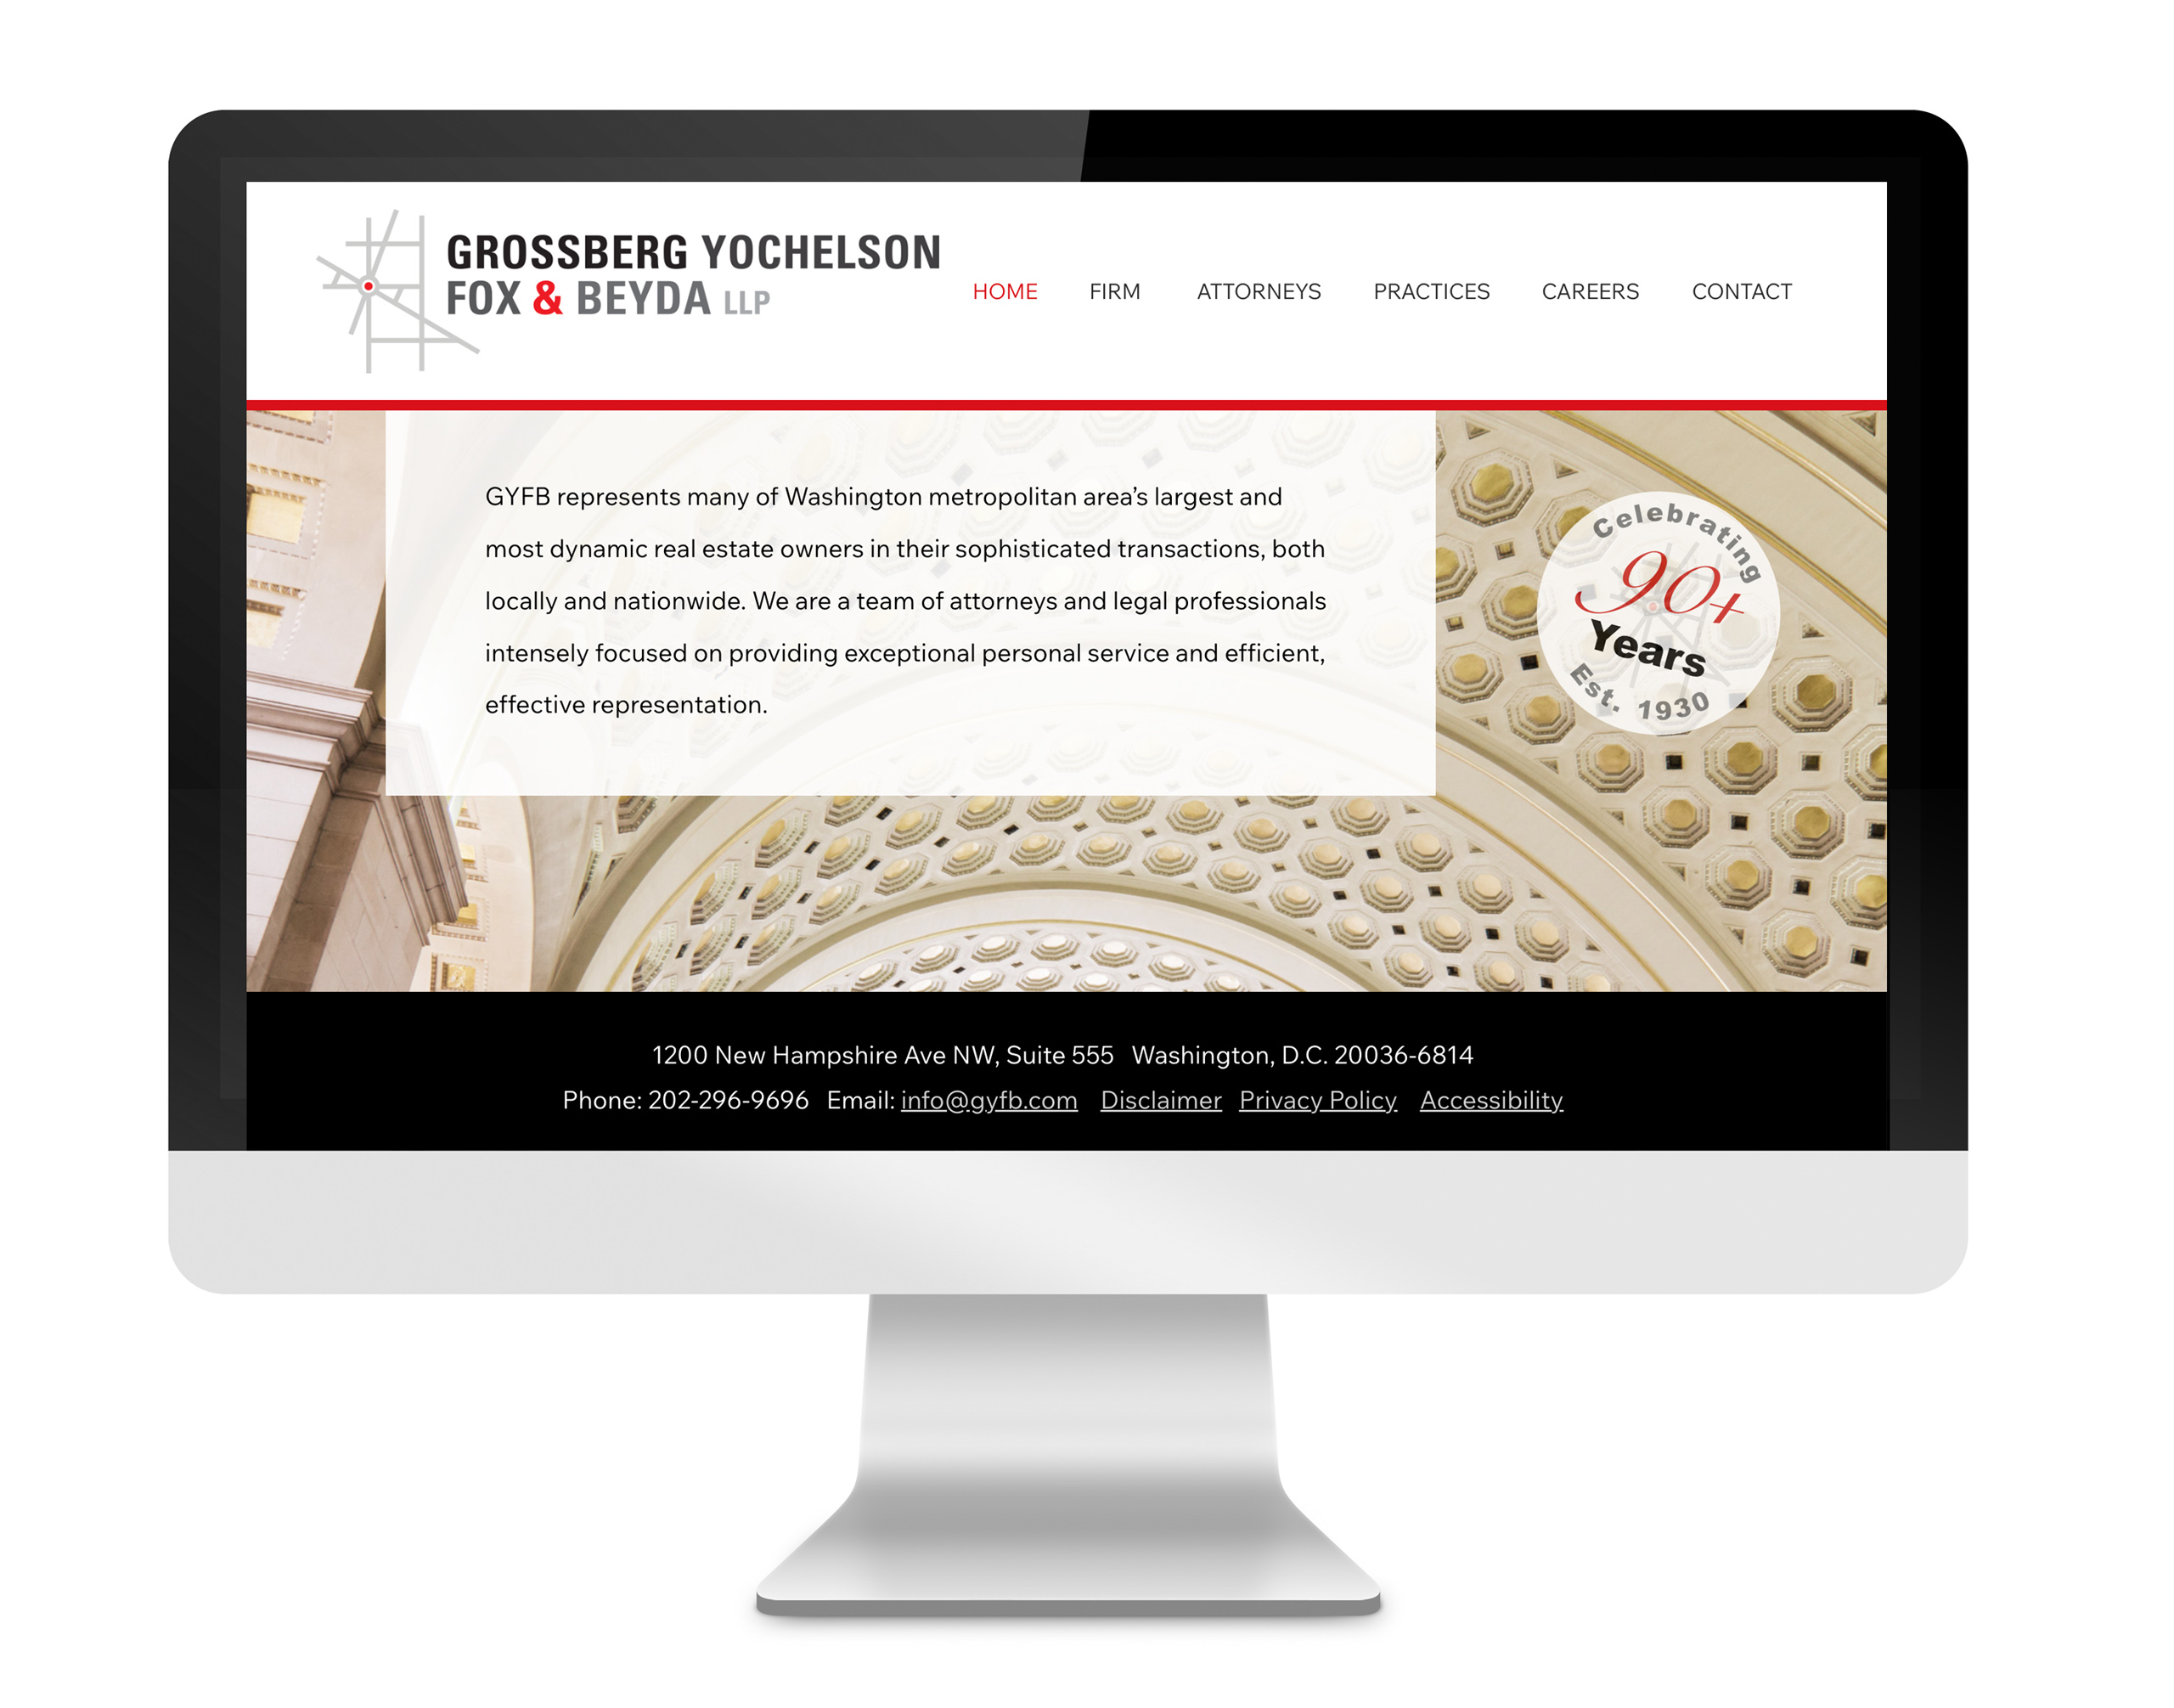 Grossberg Yochelson Fox & Beyda website, designed by DLS Design